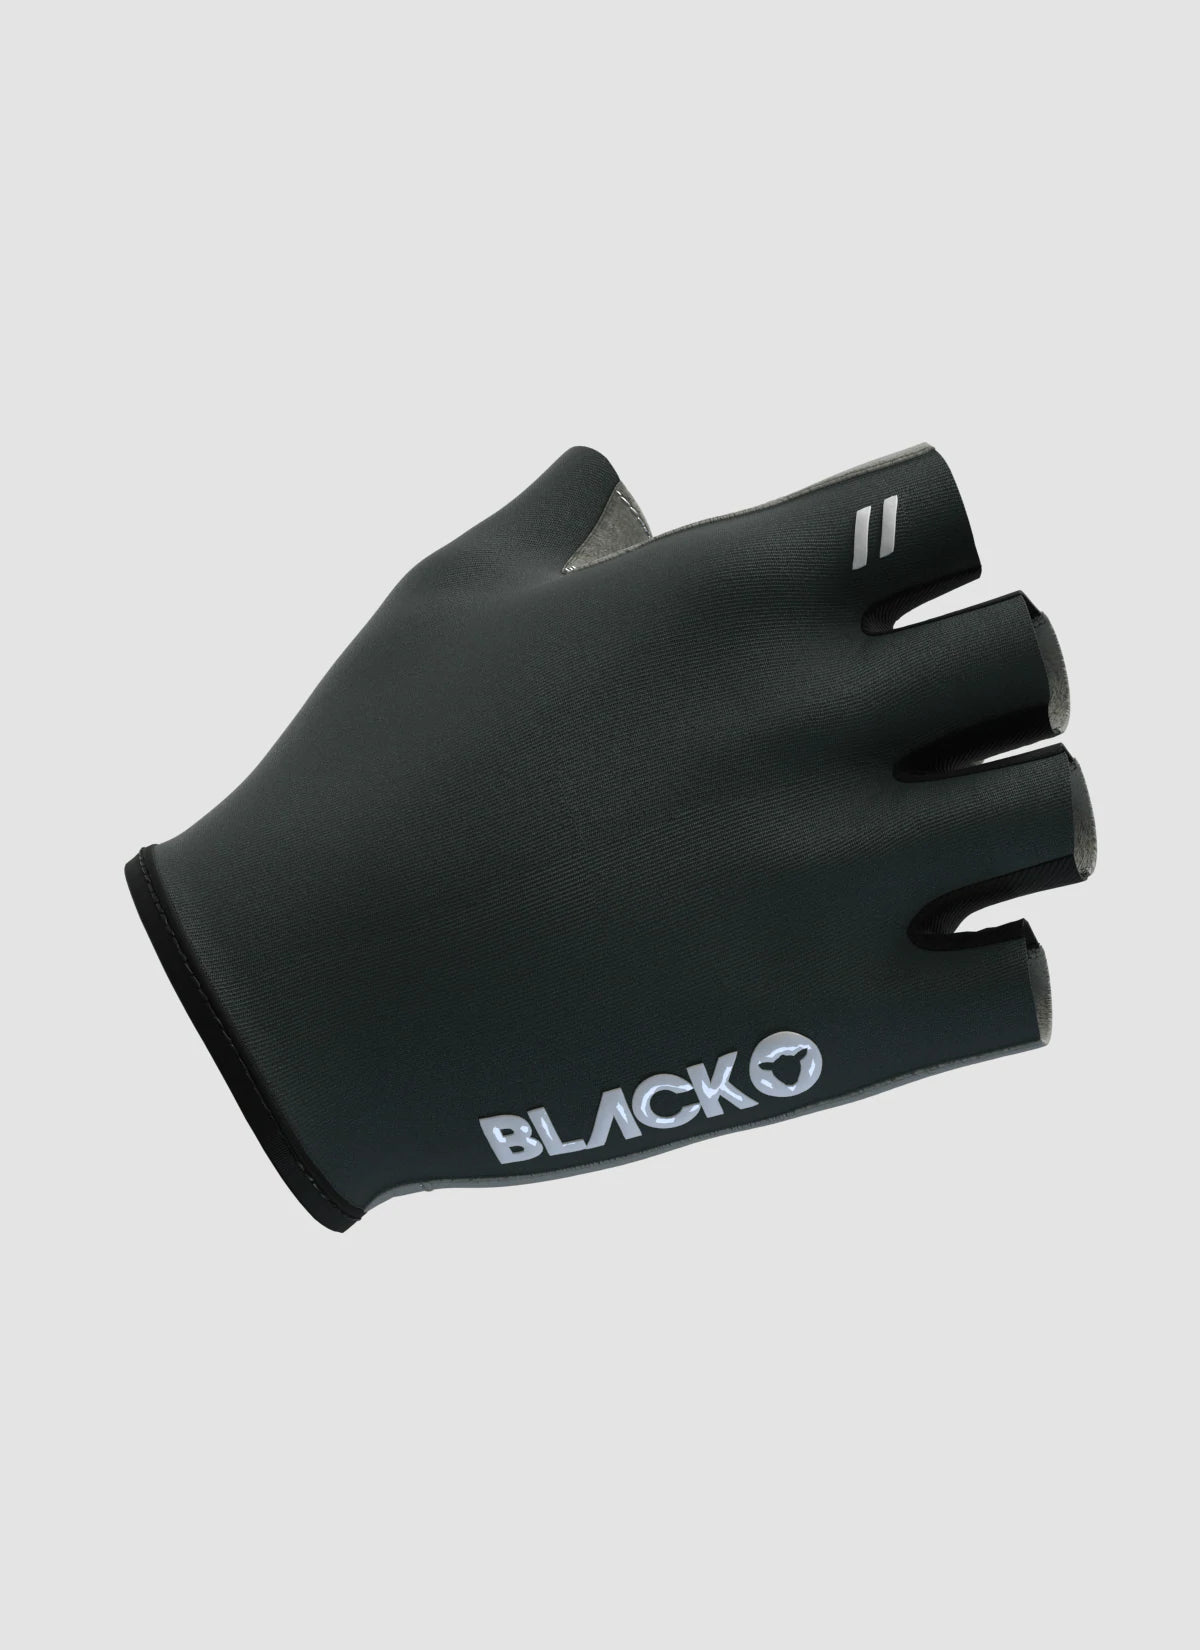 Black Sheep Cycling Essentials TEAM Gloves / Charcoal | CYCLISM Manila